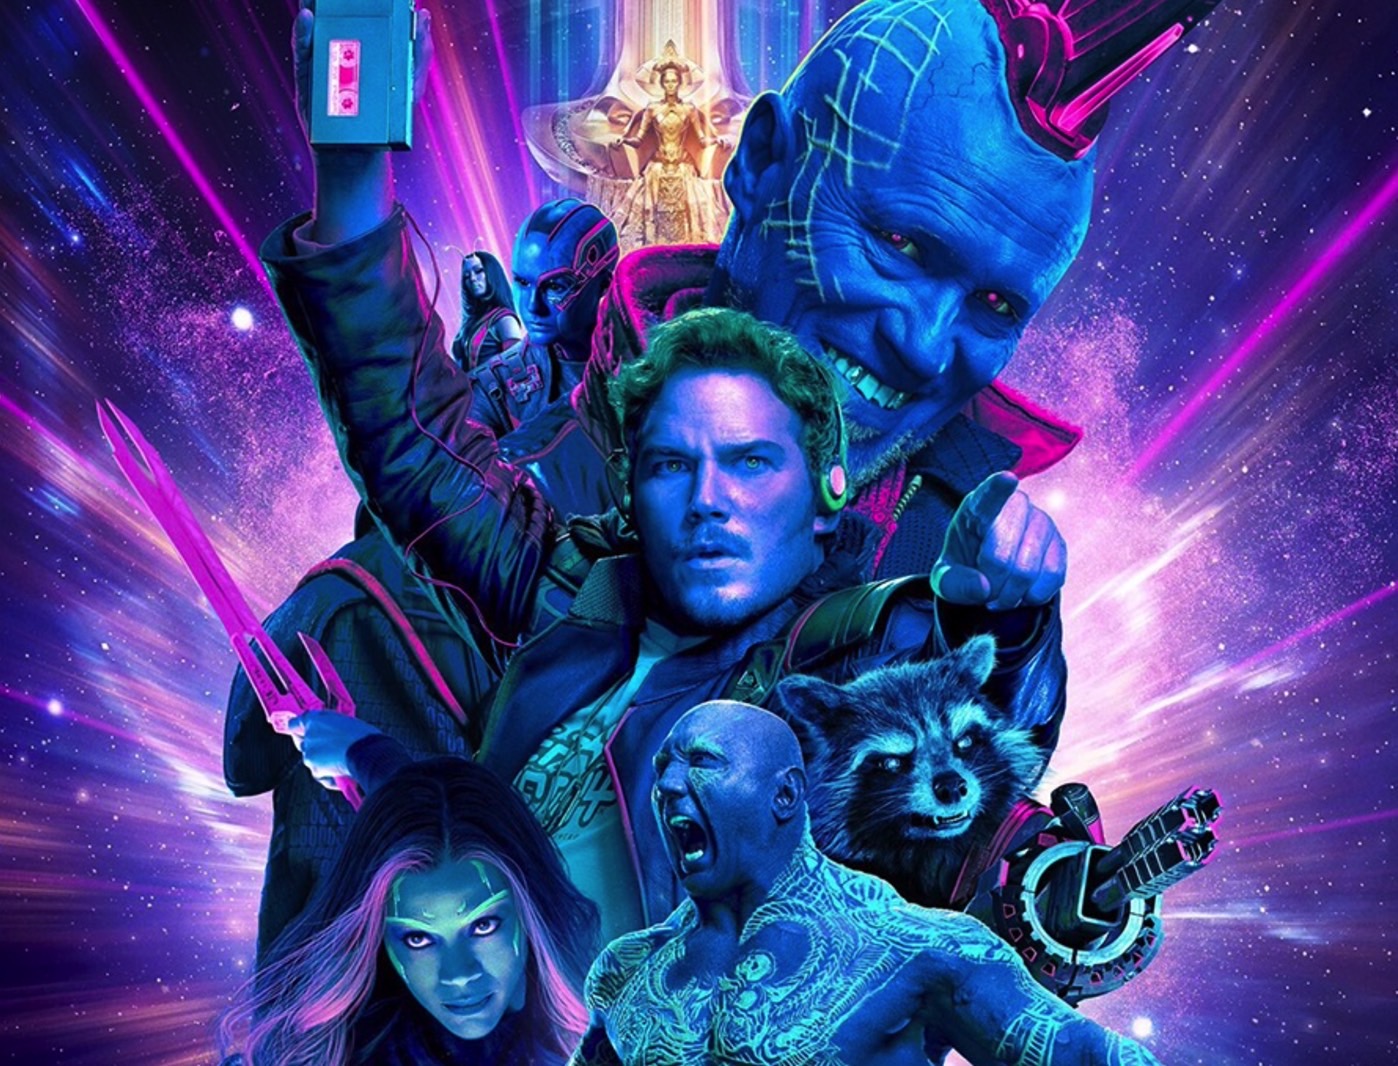 James Gunn, Guardians of the Galaxy 3 director teases a tragic end